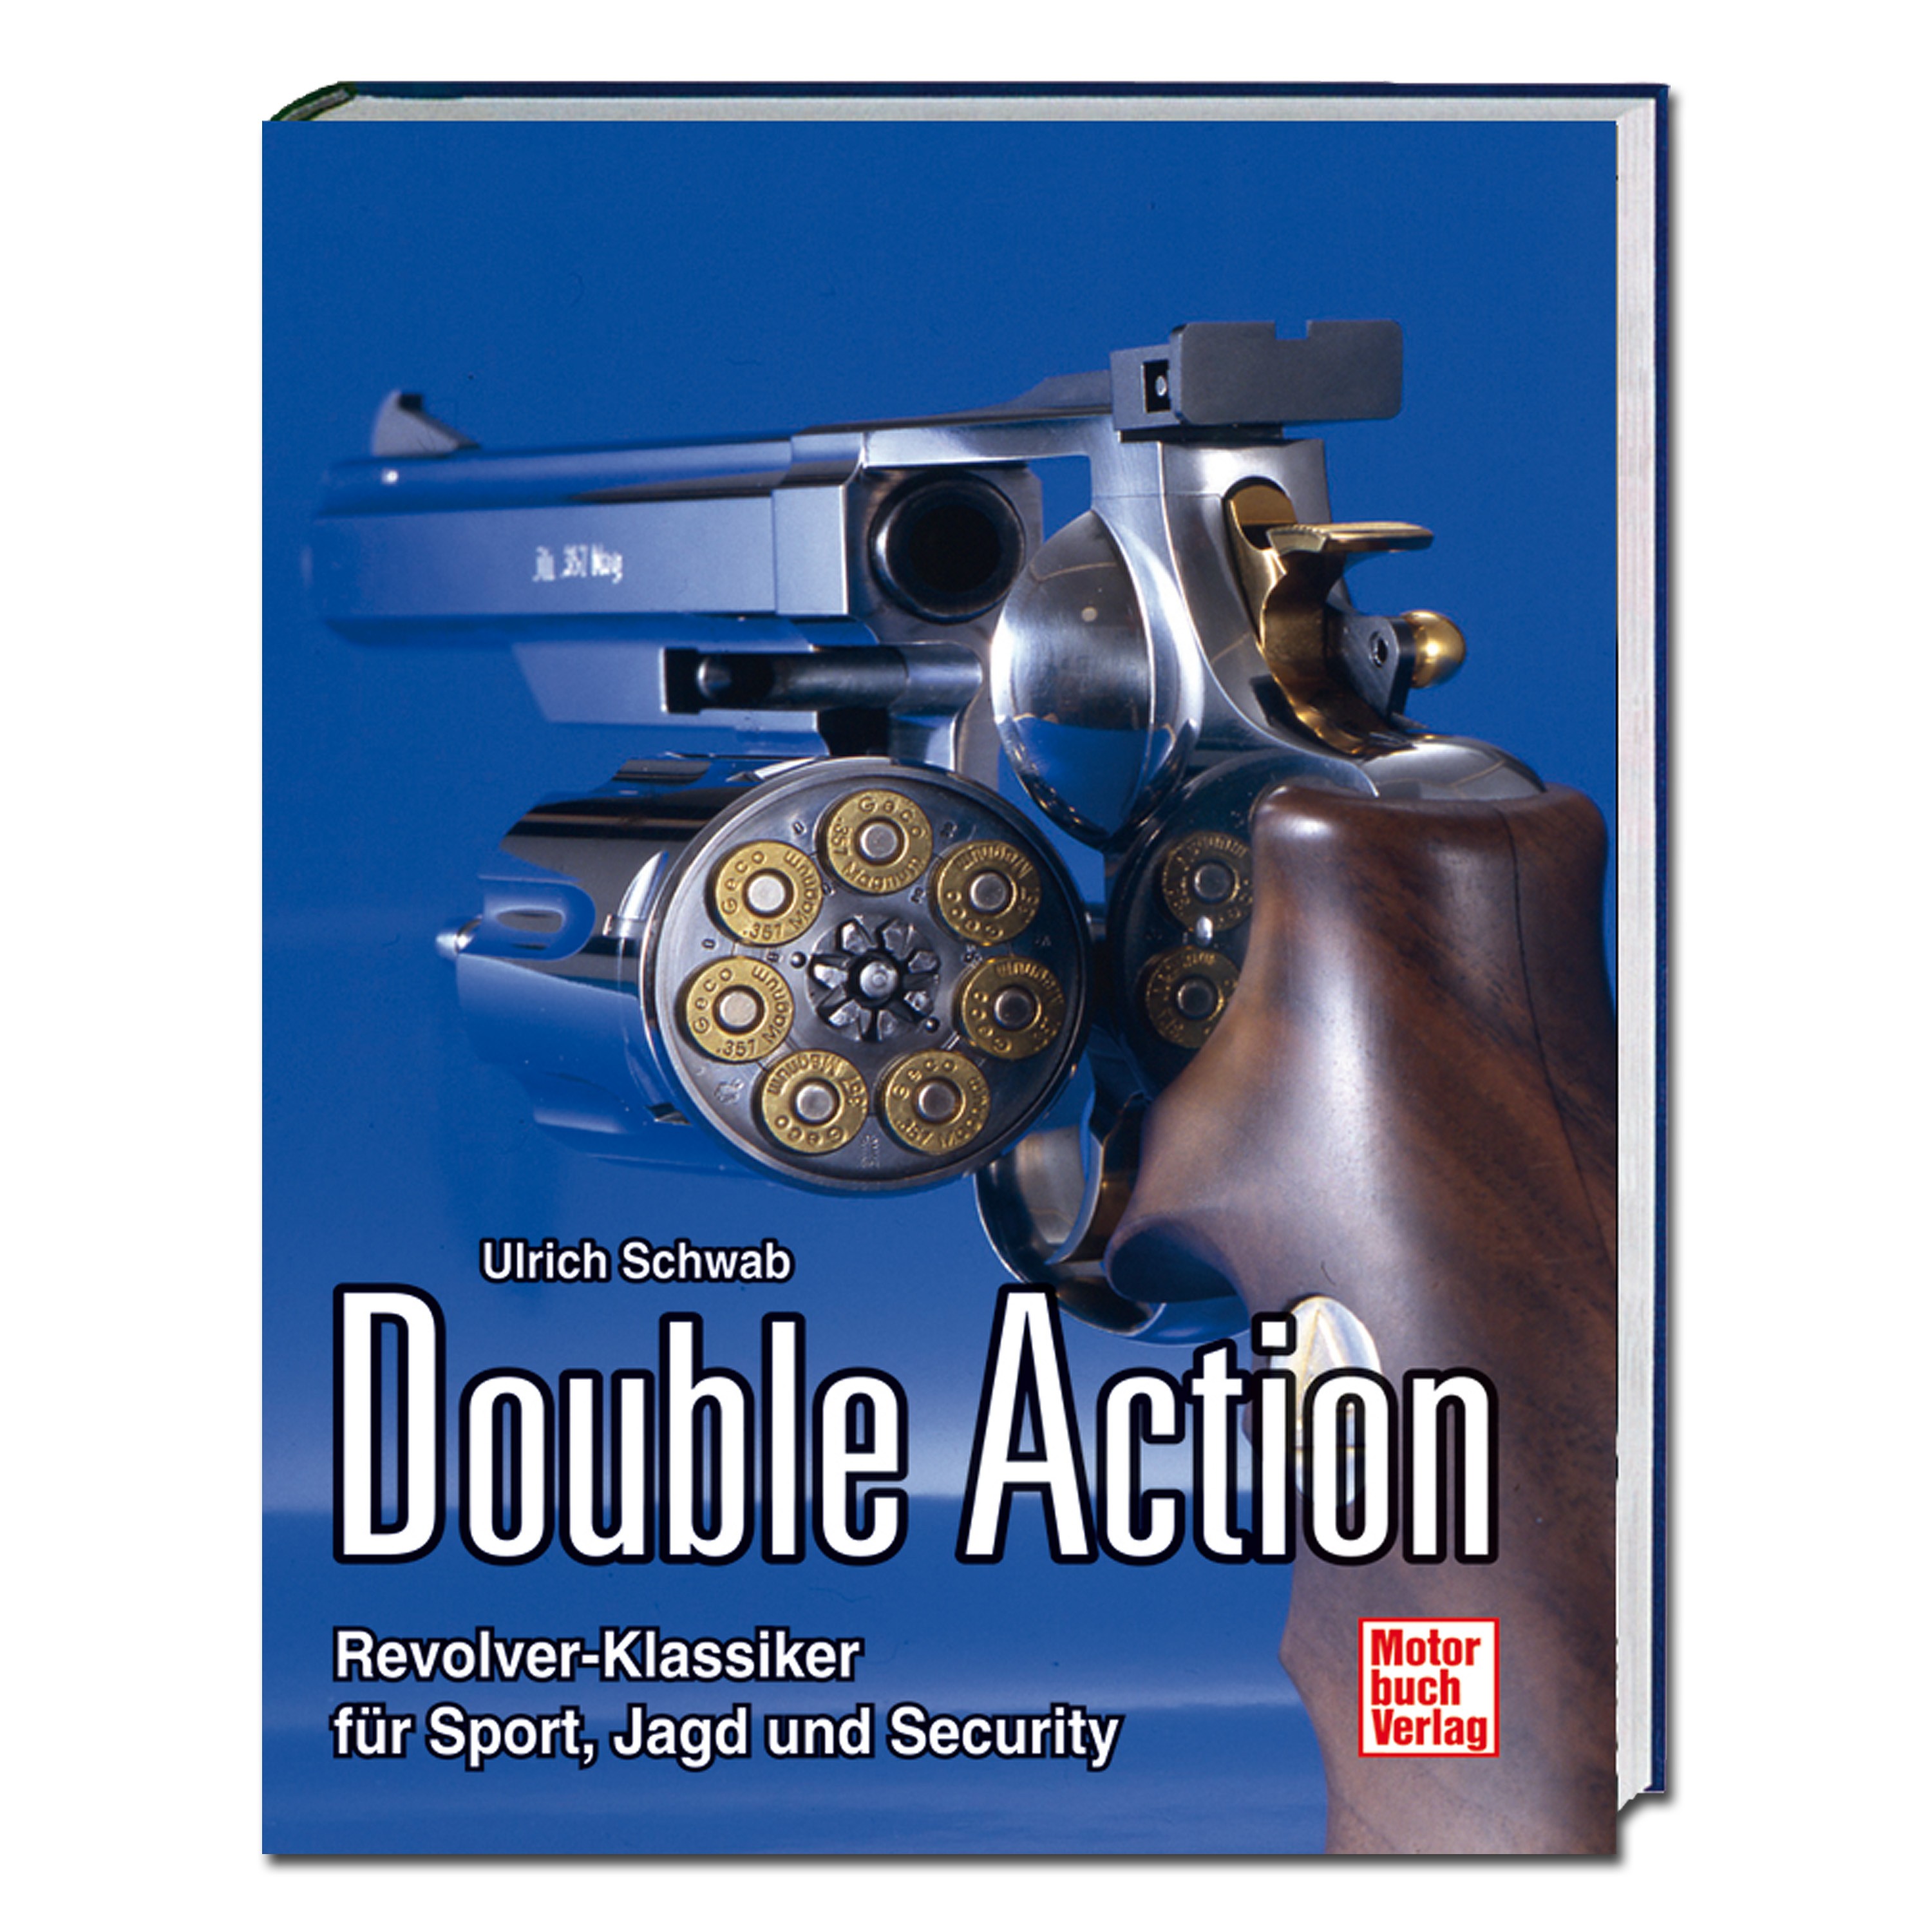 Book Double Action - Revolver-Klassiker | Book Double Action - Revolver ...